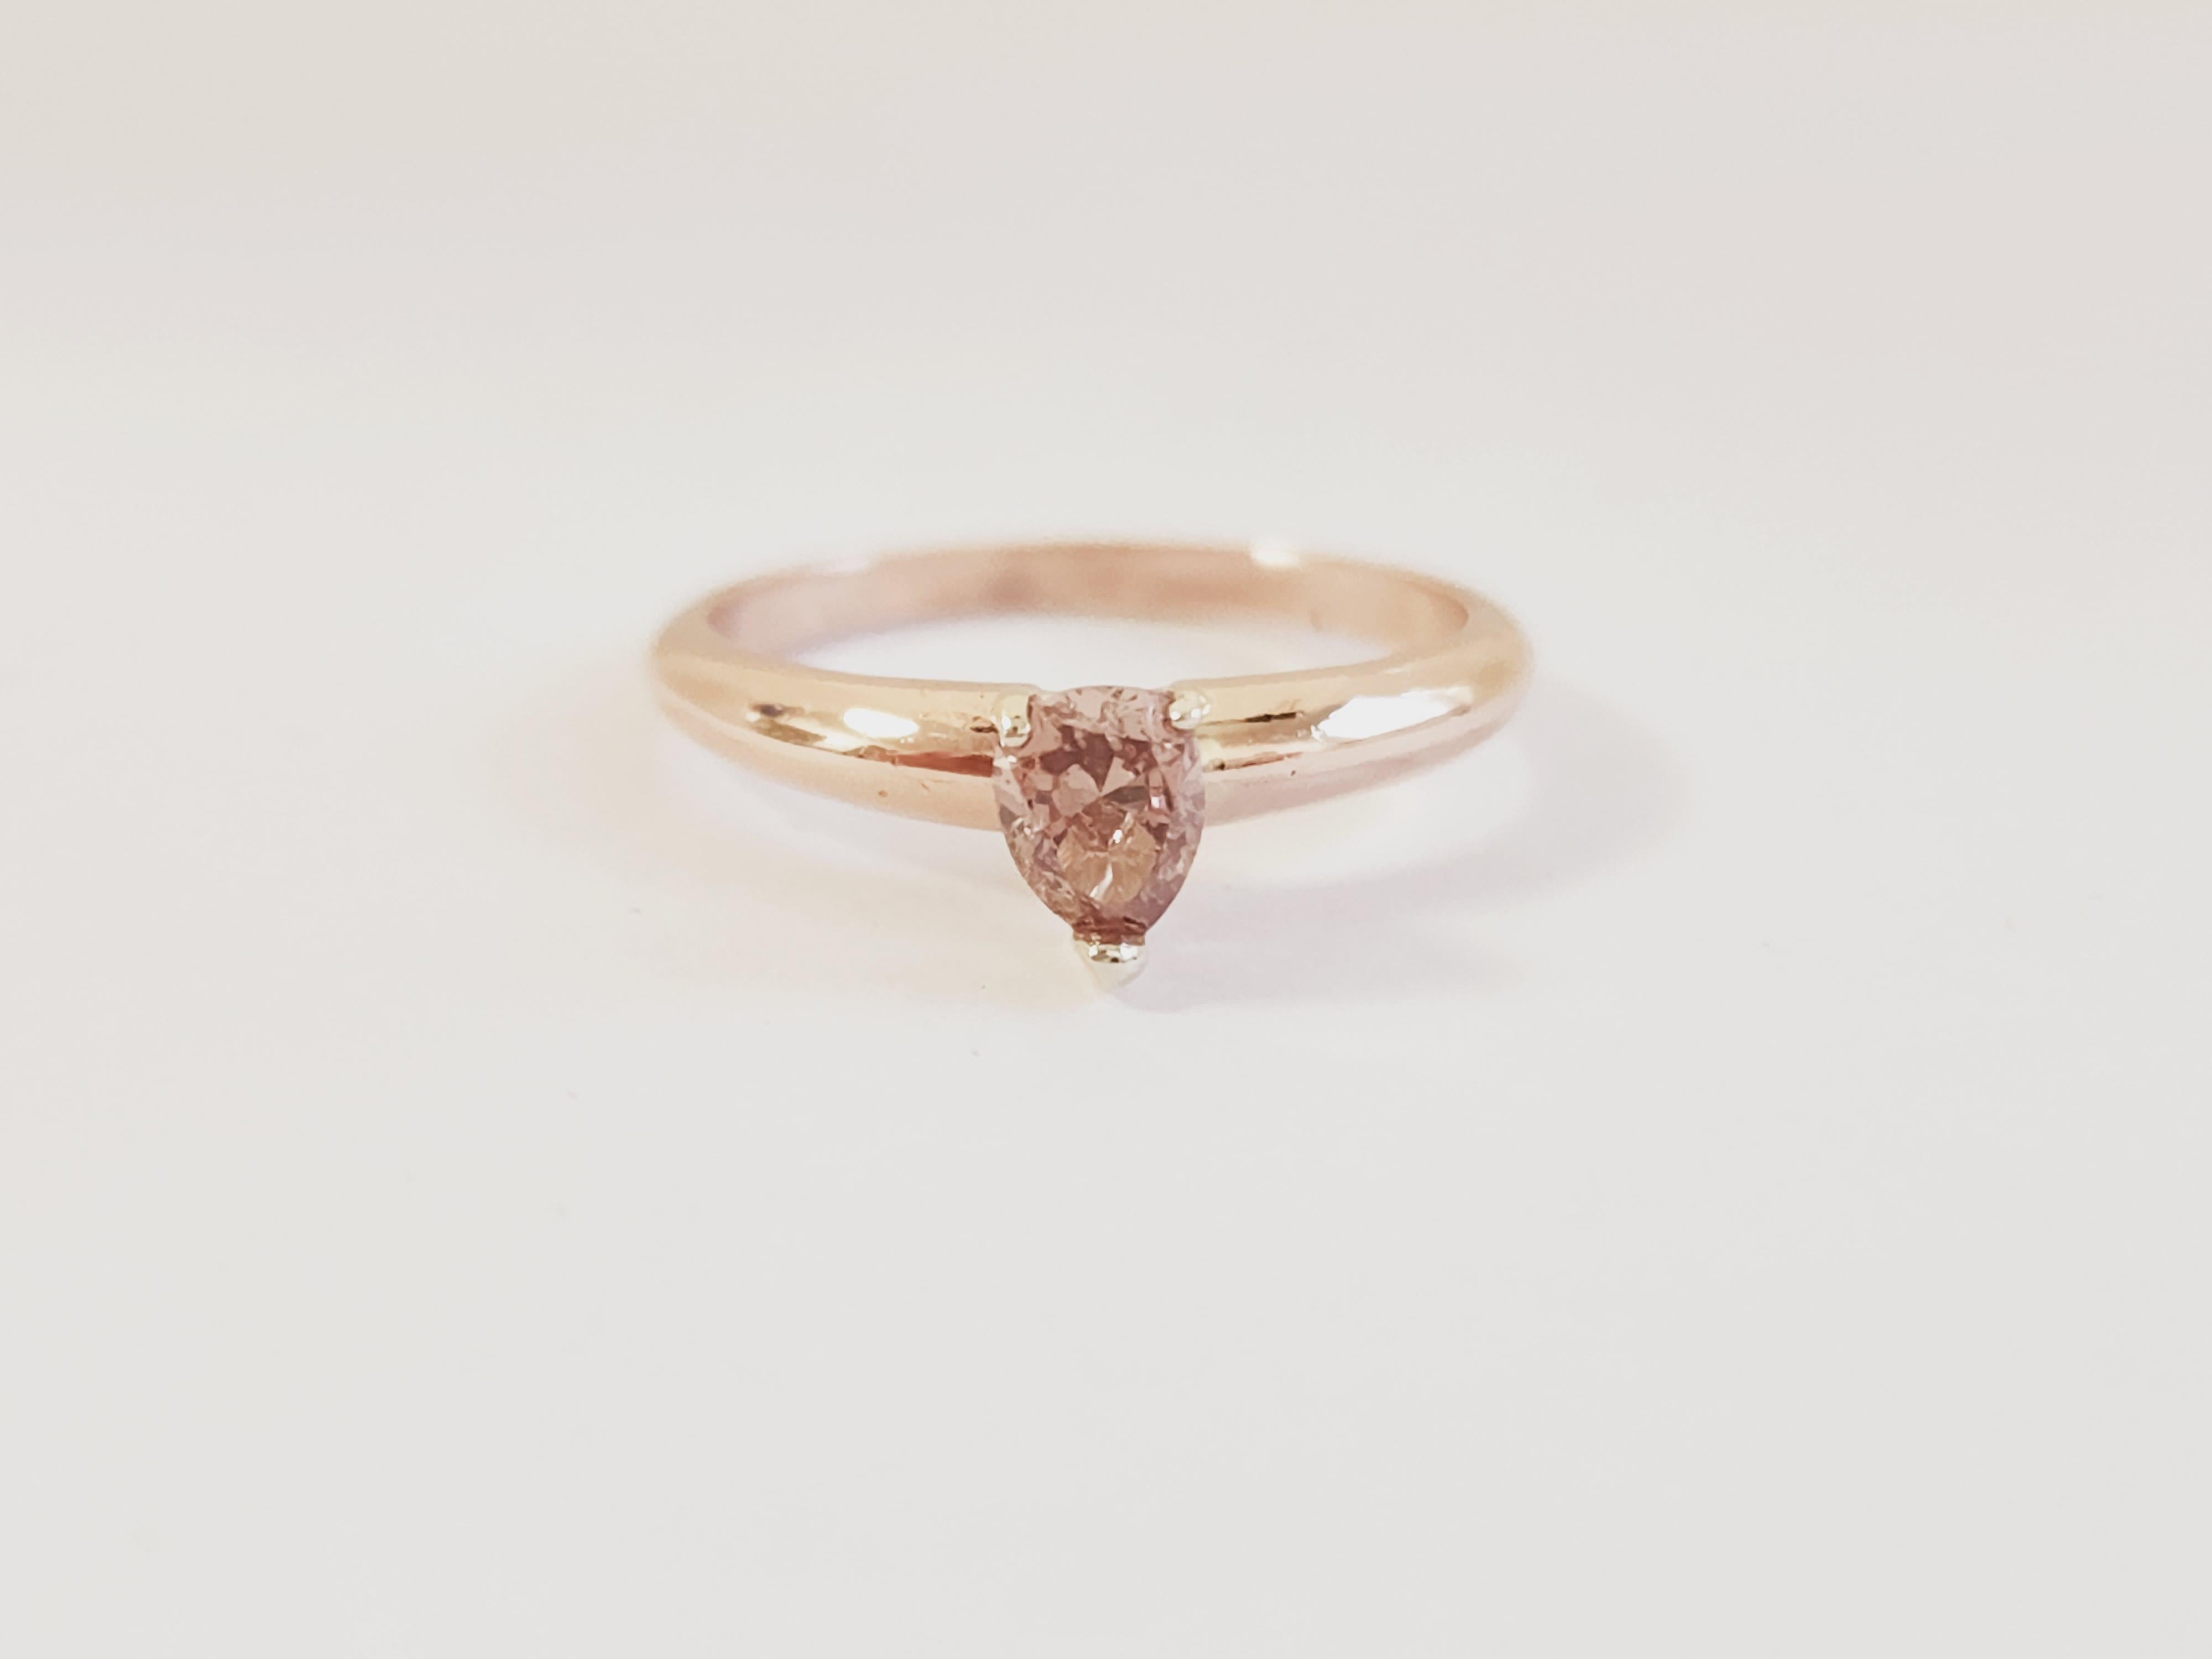 Natural fancy brownish pink pear shape diamond weighing 0.30 carats. Set on 14 Karat Rose Gold Size 5